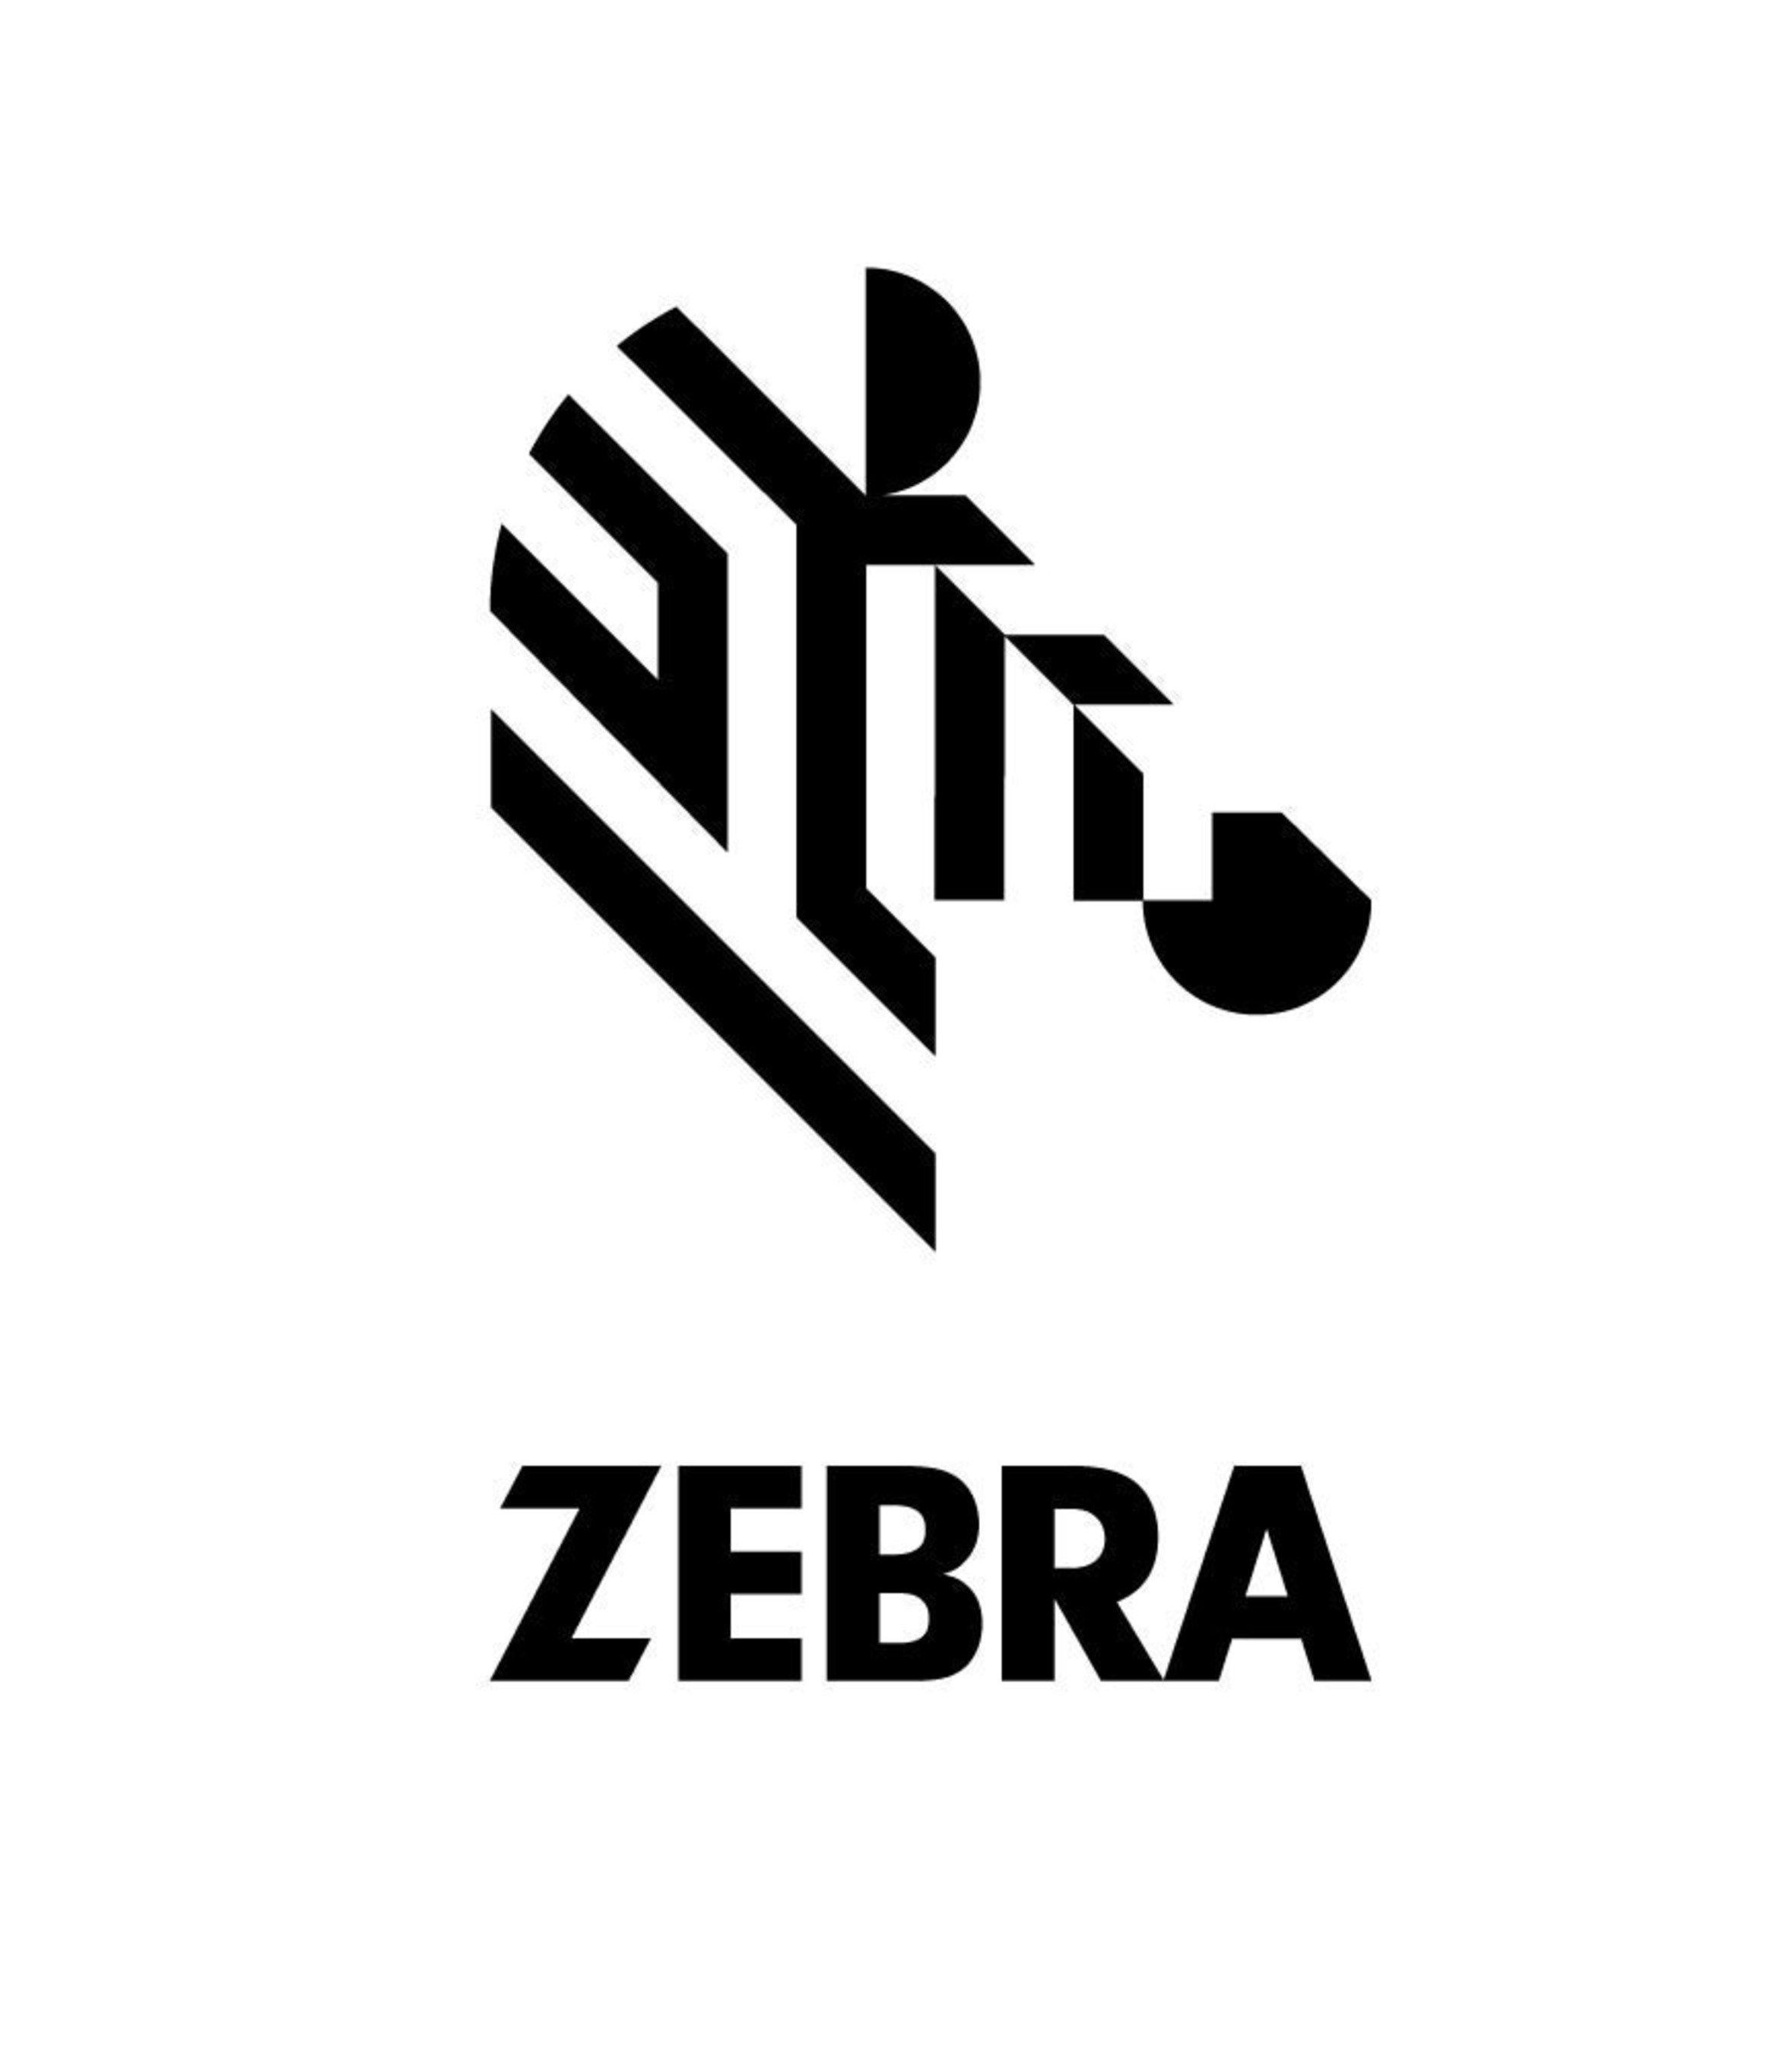 Cool Zebra Logo - Zebra Brand | www.topsimages.com